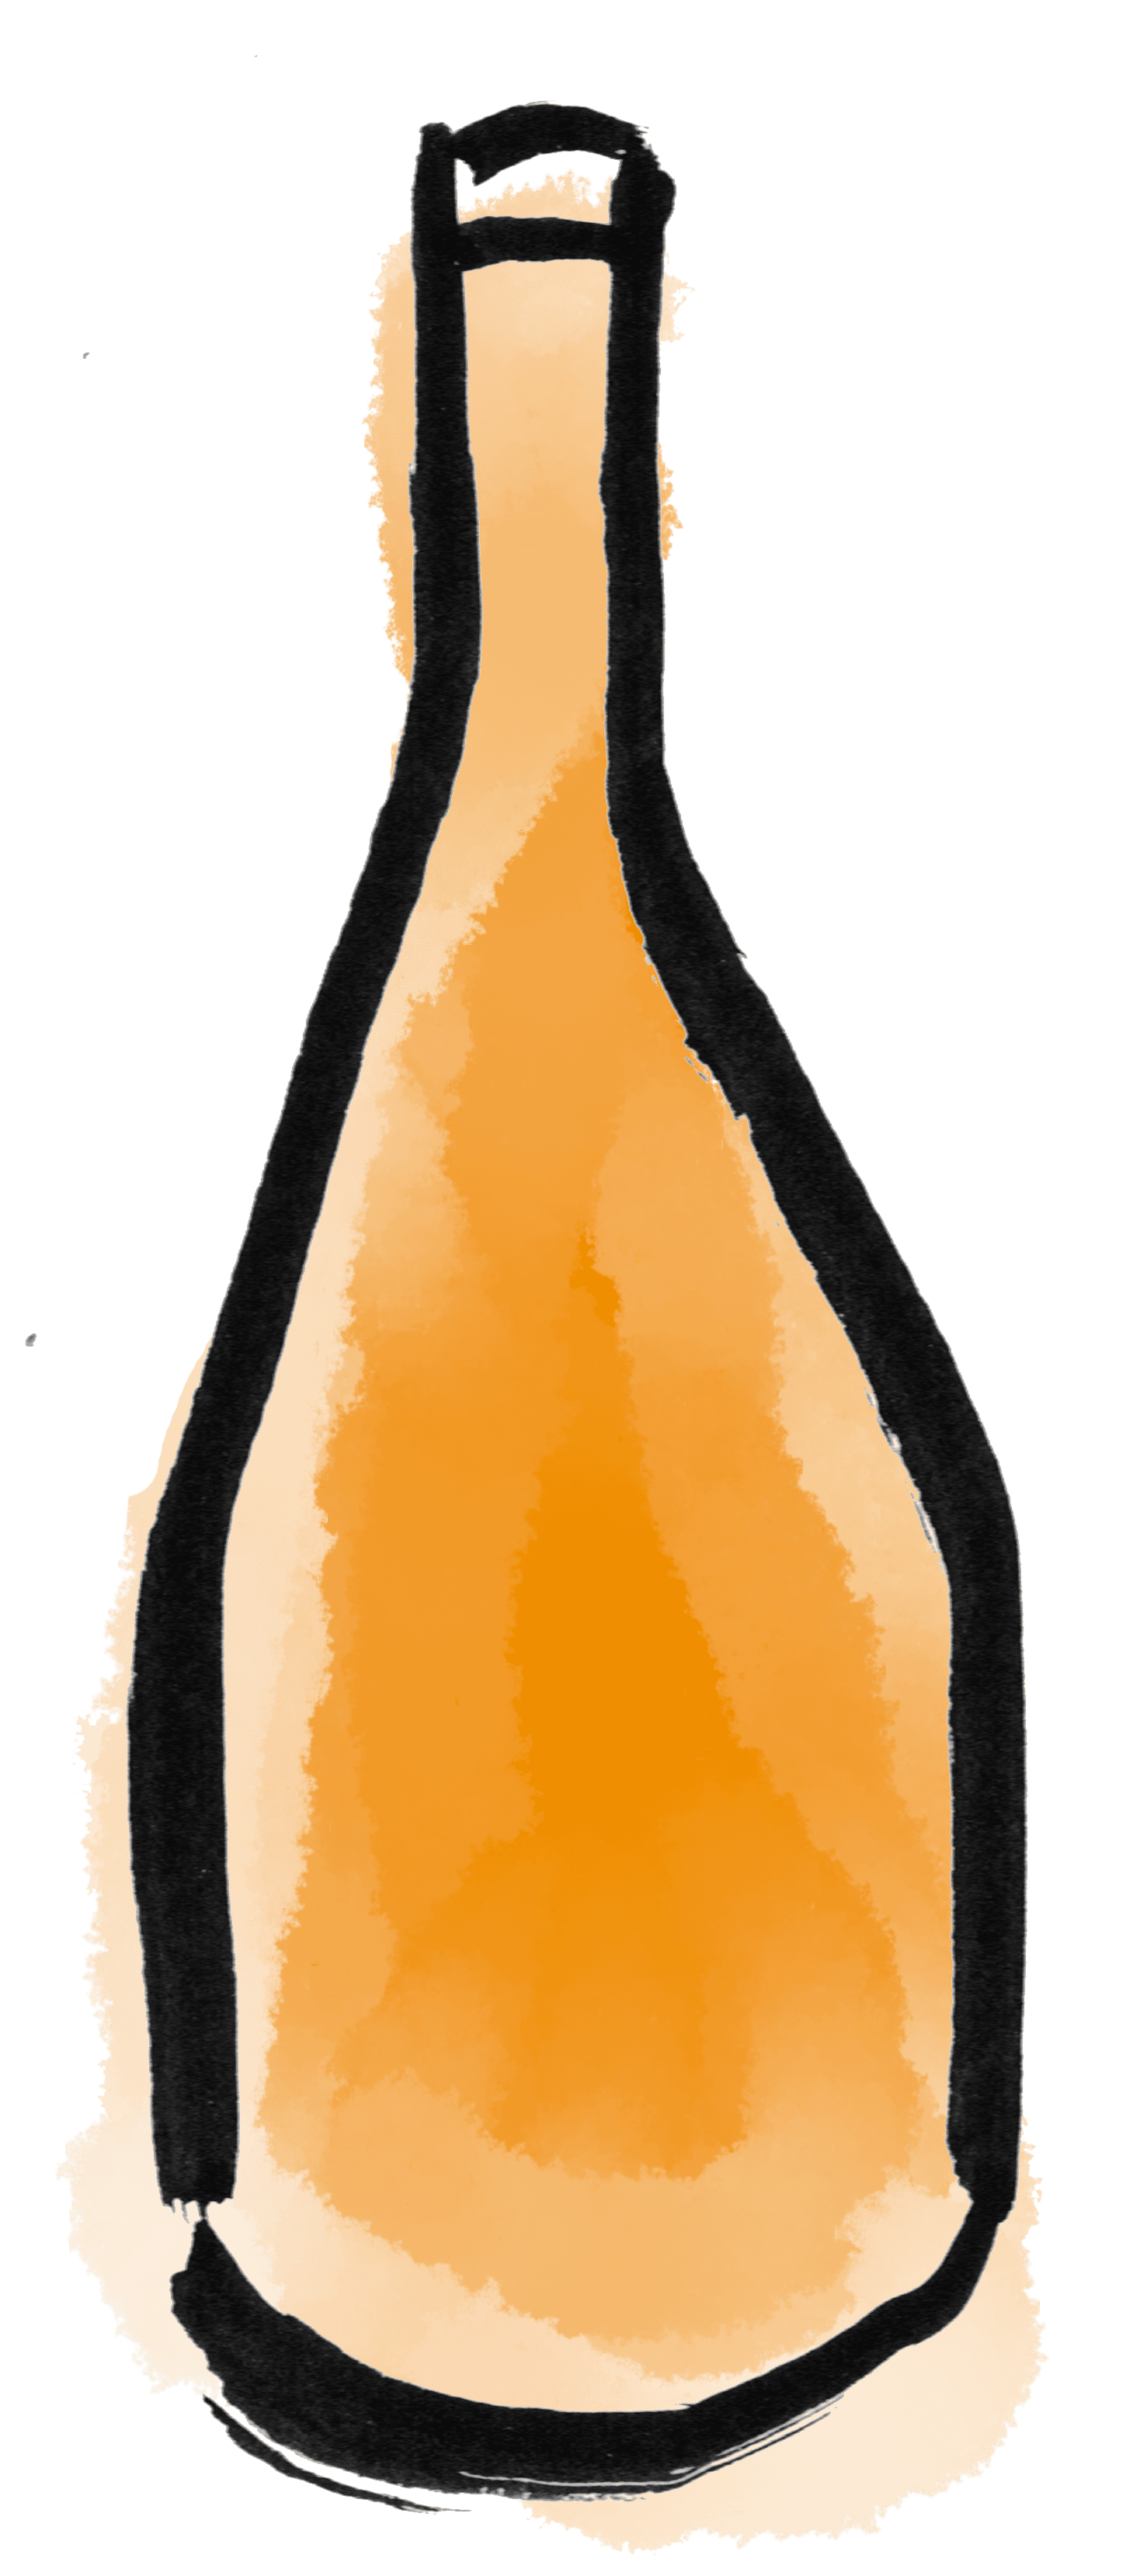 Dessin bouteille vin orange